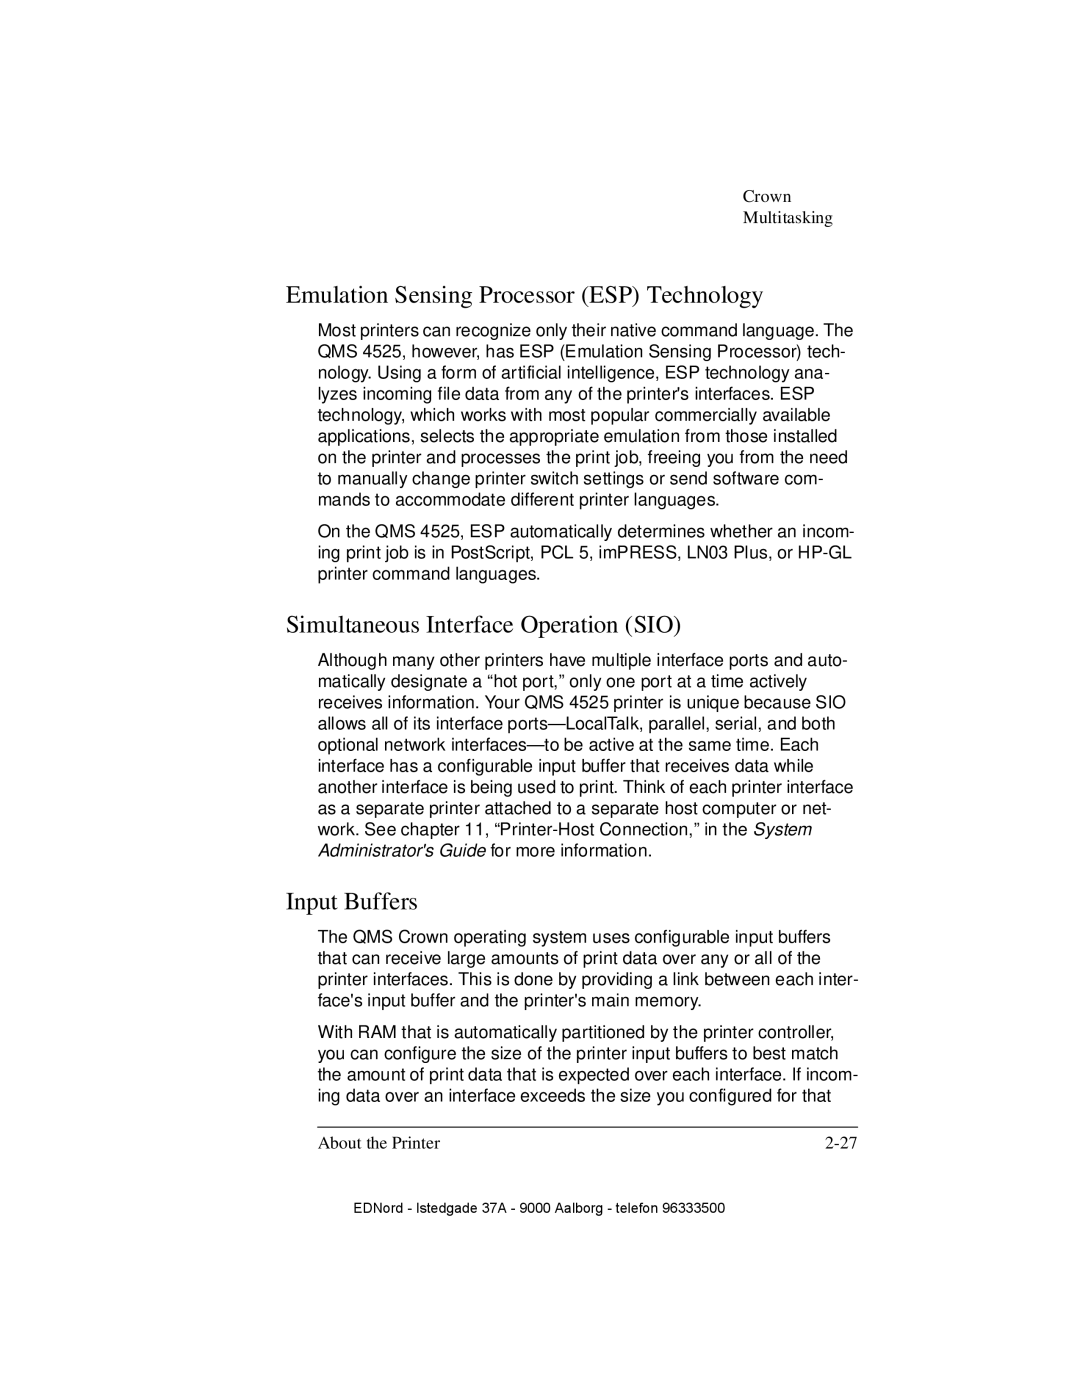 IBM QMS 4525 manual Emulation Sensing Processor ESP Technology, Simultaneous Interface Operation SIO, Input Buffers 